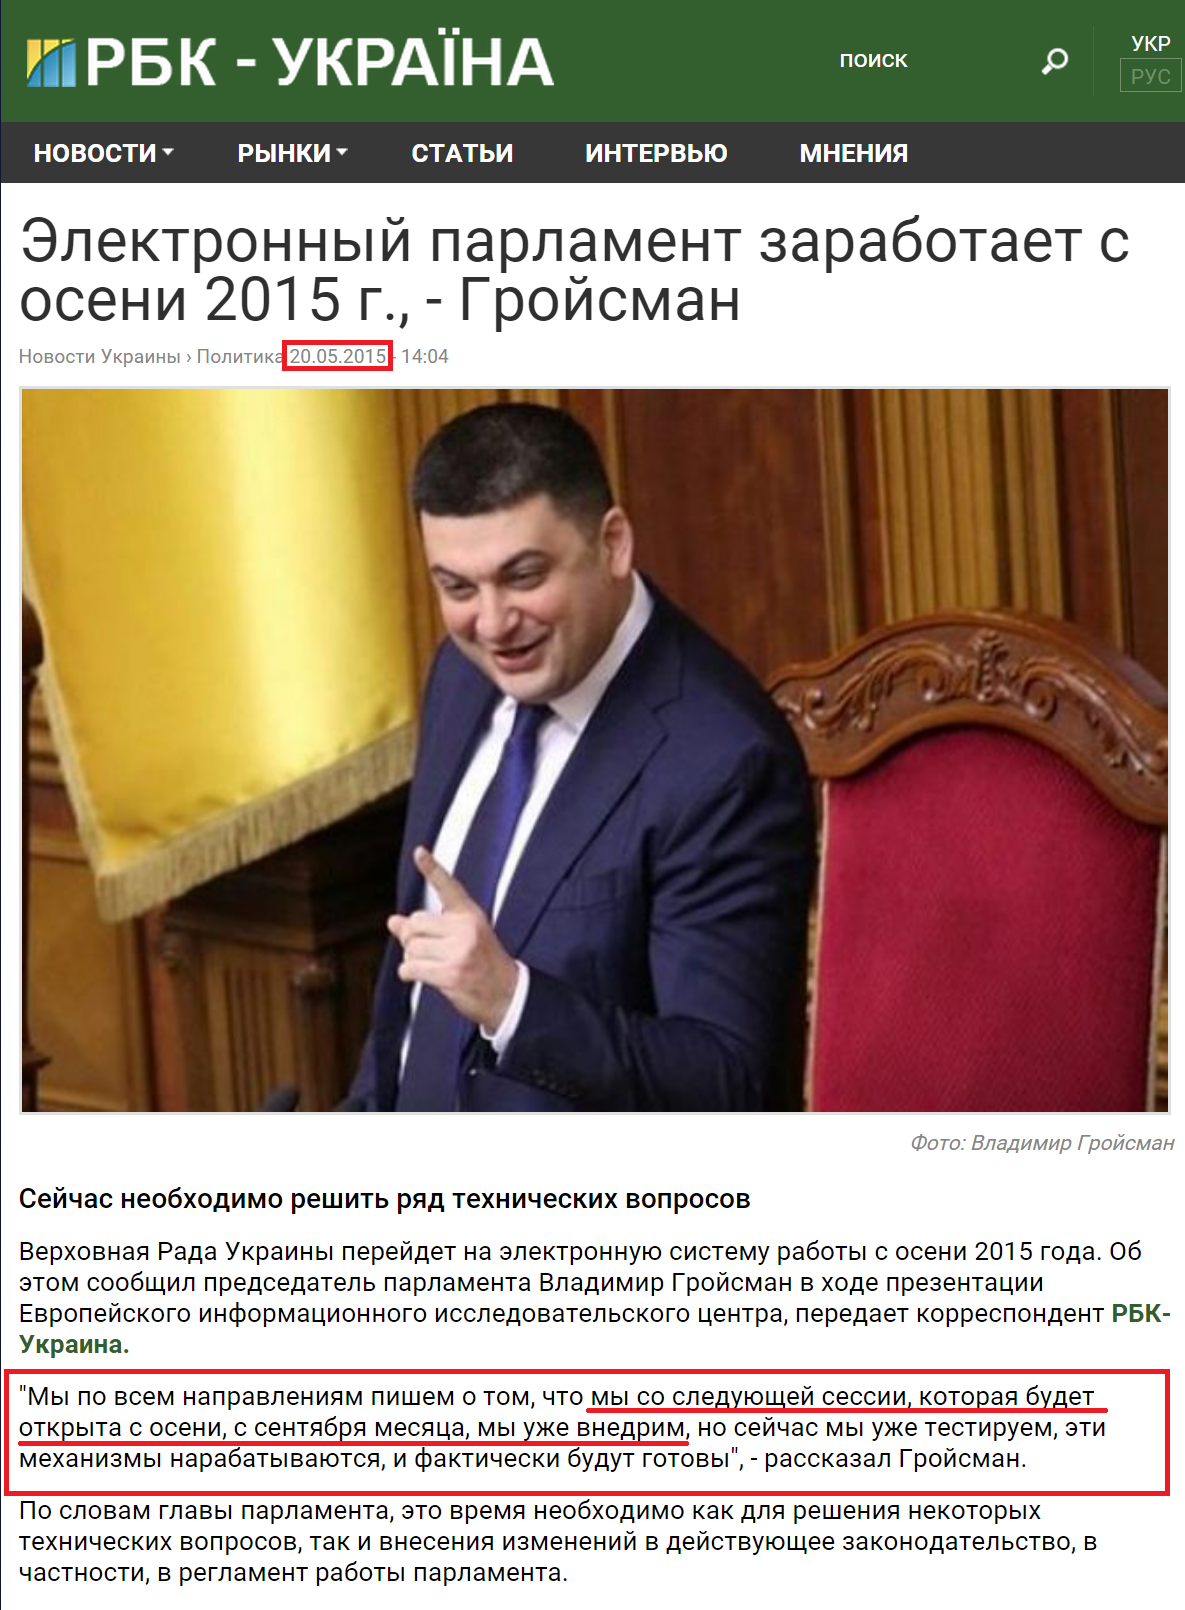 http://www.rbc.ua/rus/news/elektronnyy-parlament-zarabotaet-oseni-g-1432119799.html